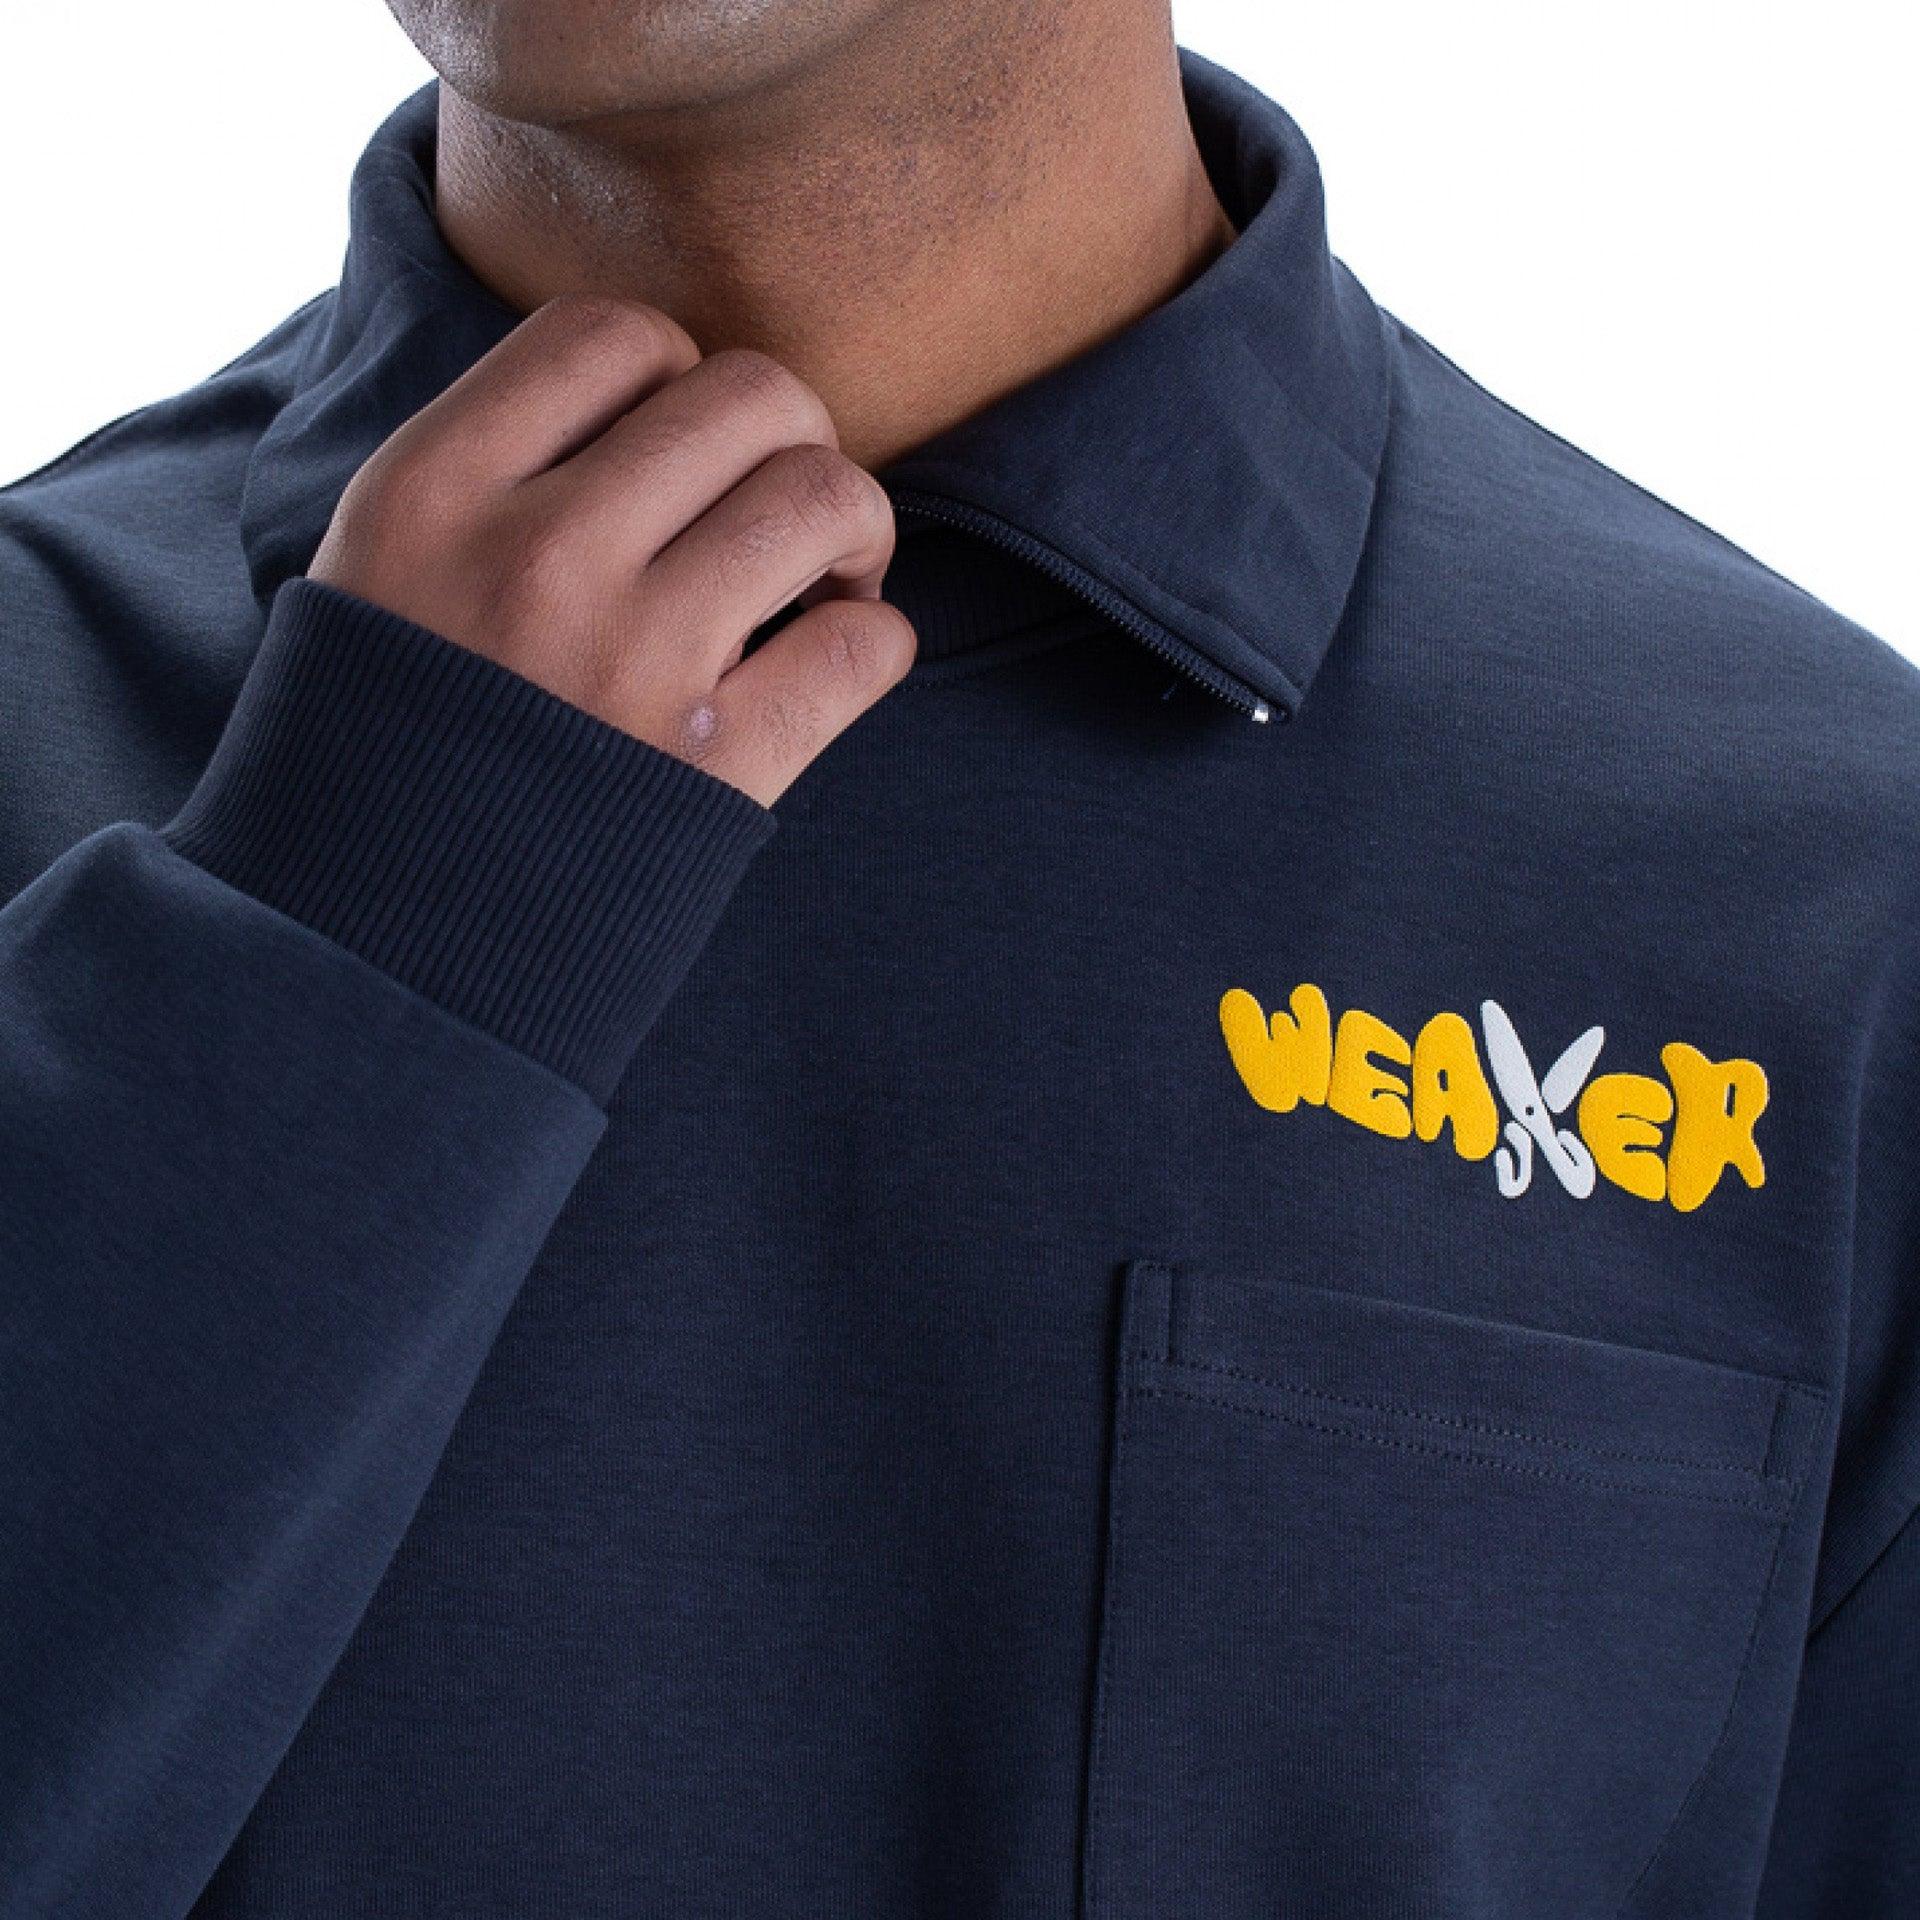 Navy Blue Sweatshirt By Weaver Design - WECRE8